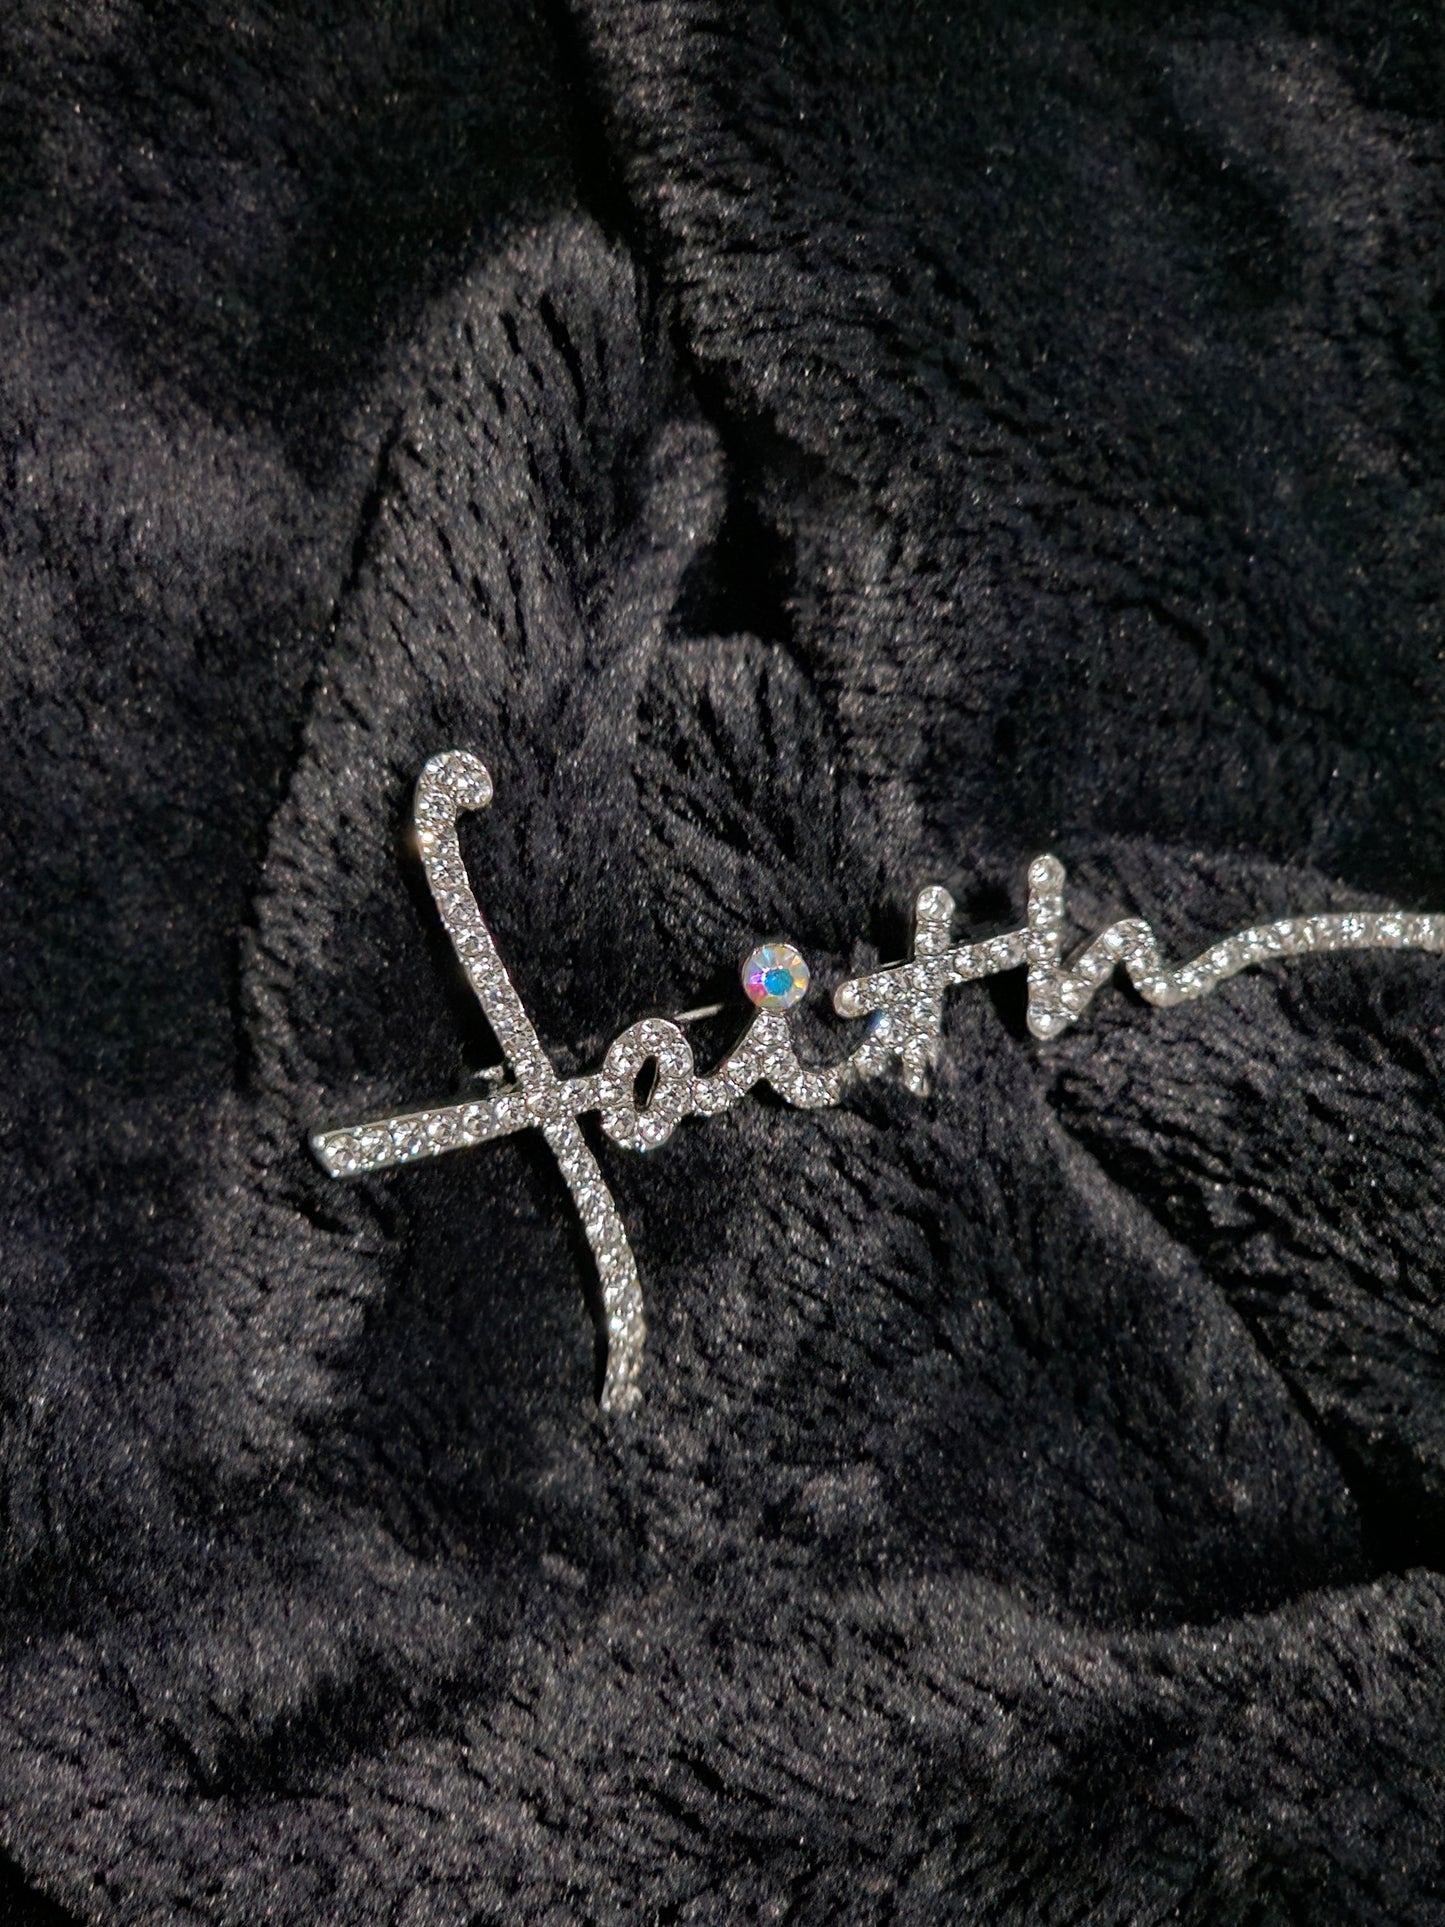 Diamanté encrusted letters spelling the word faith 